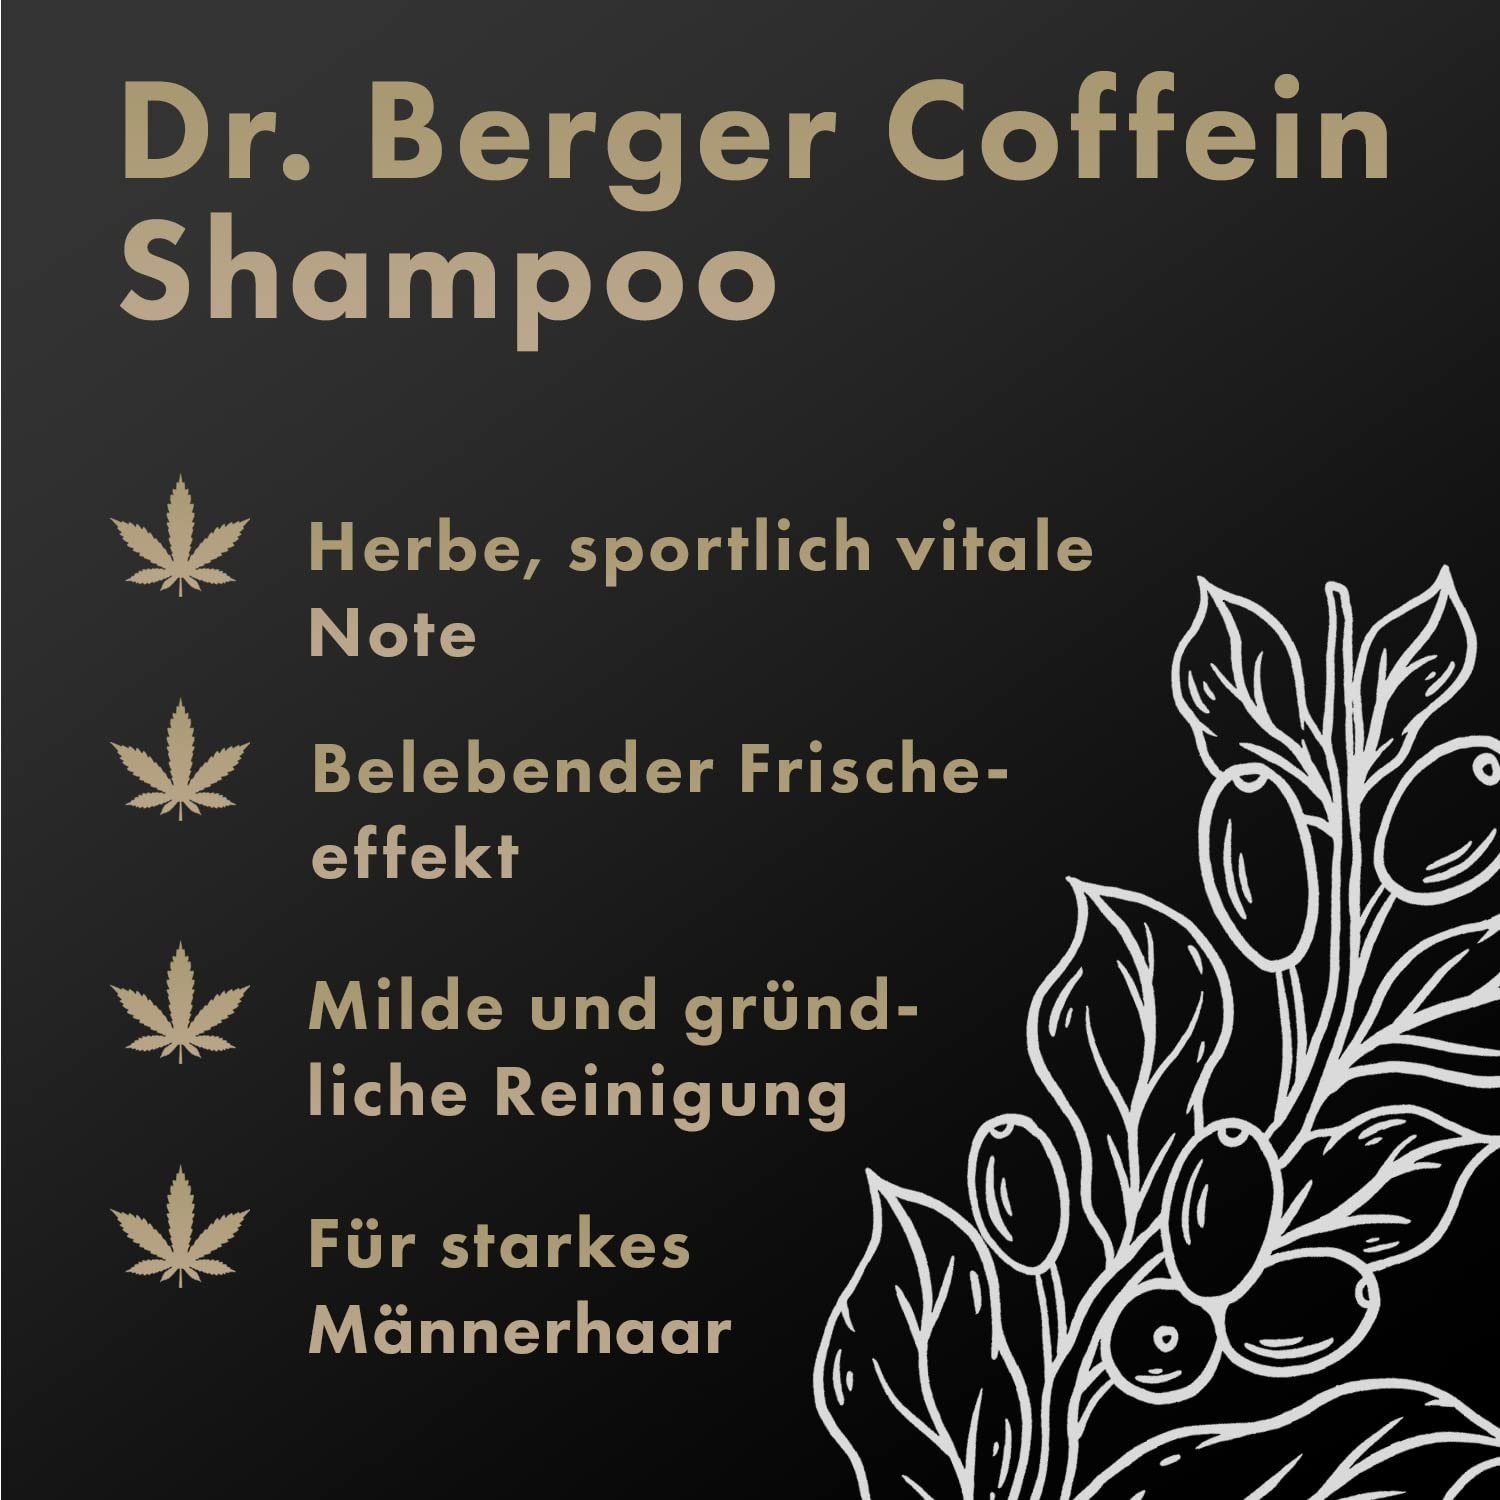 Dr. Edition" 200 Coffein Menthol ml Haarshampoo Berger "Black & Shampoo